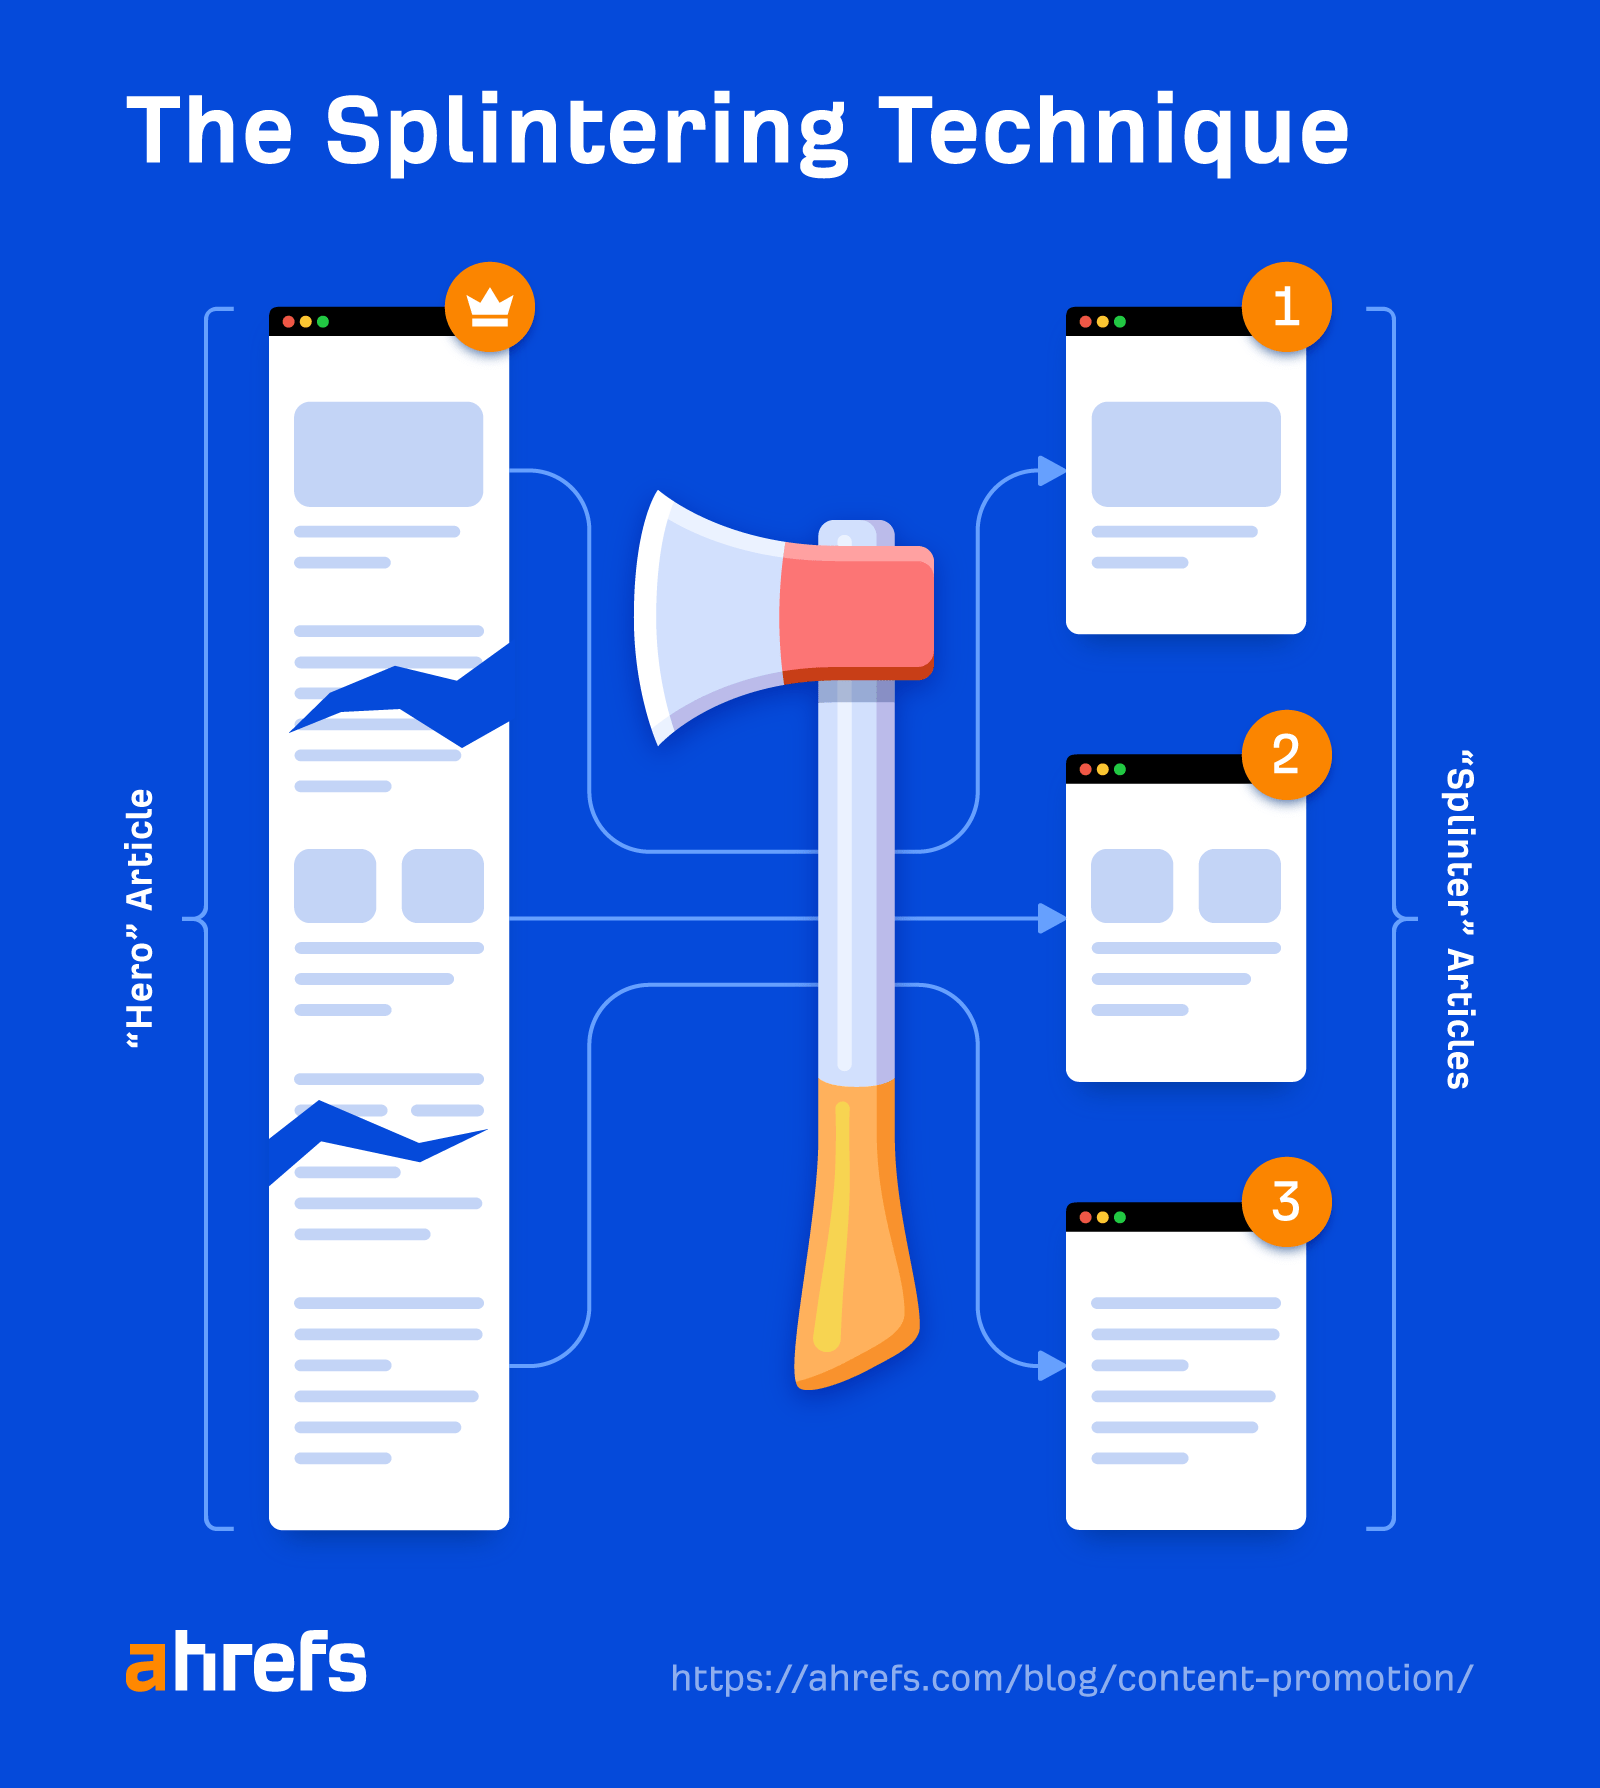 An illustration of the Splintering Technique